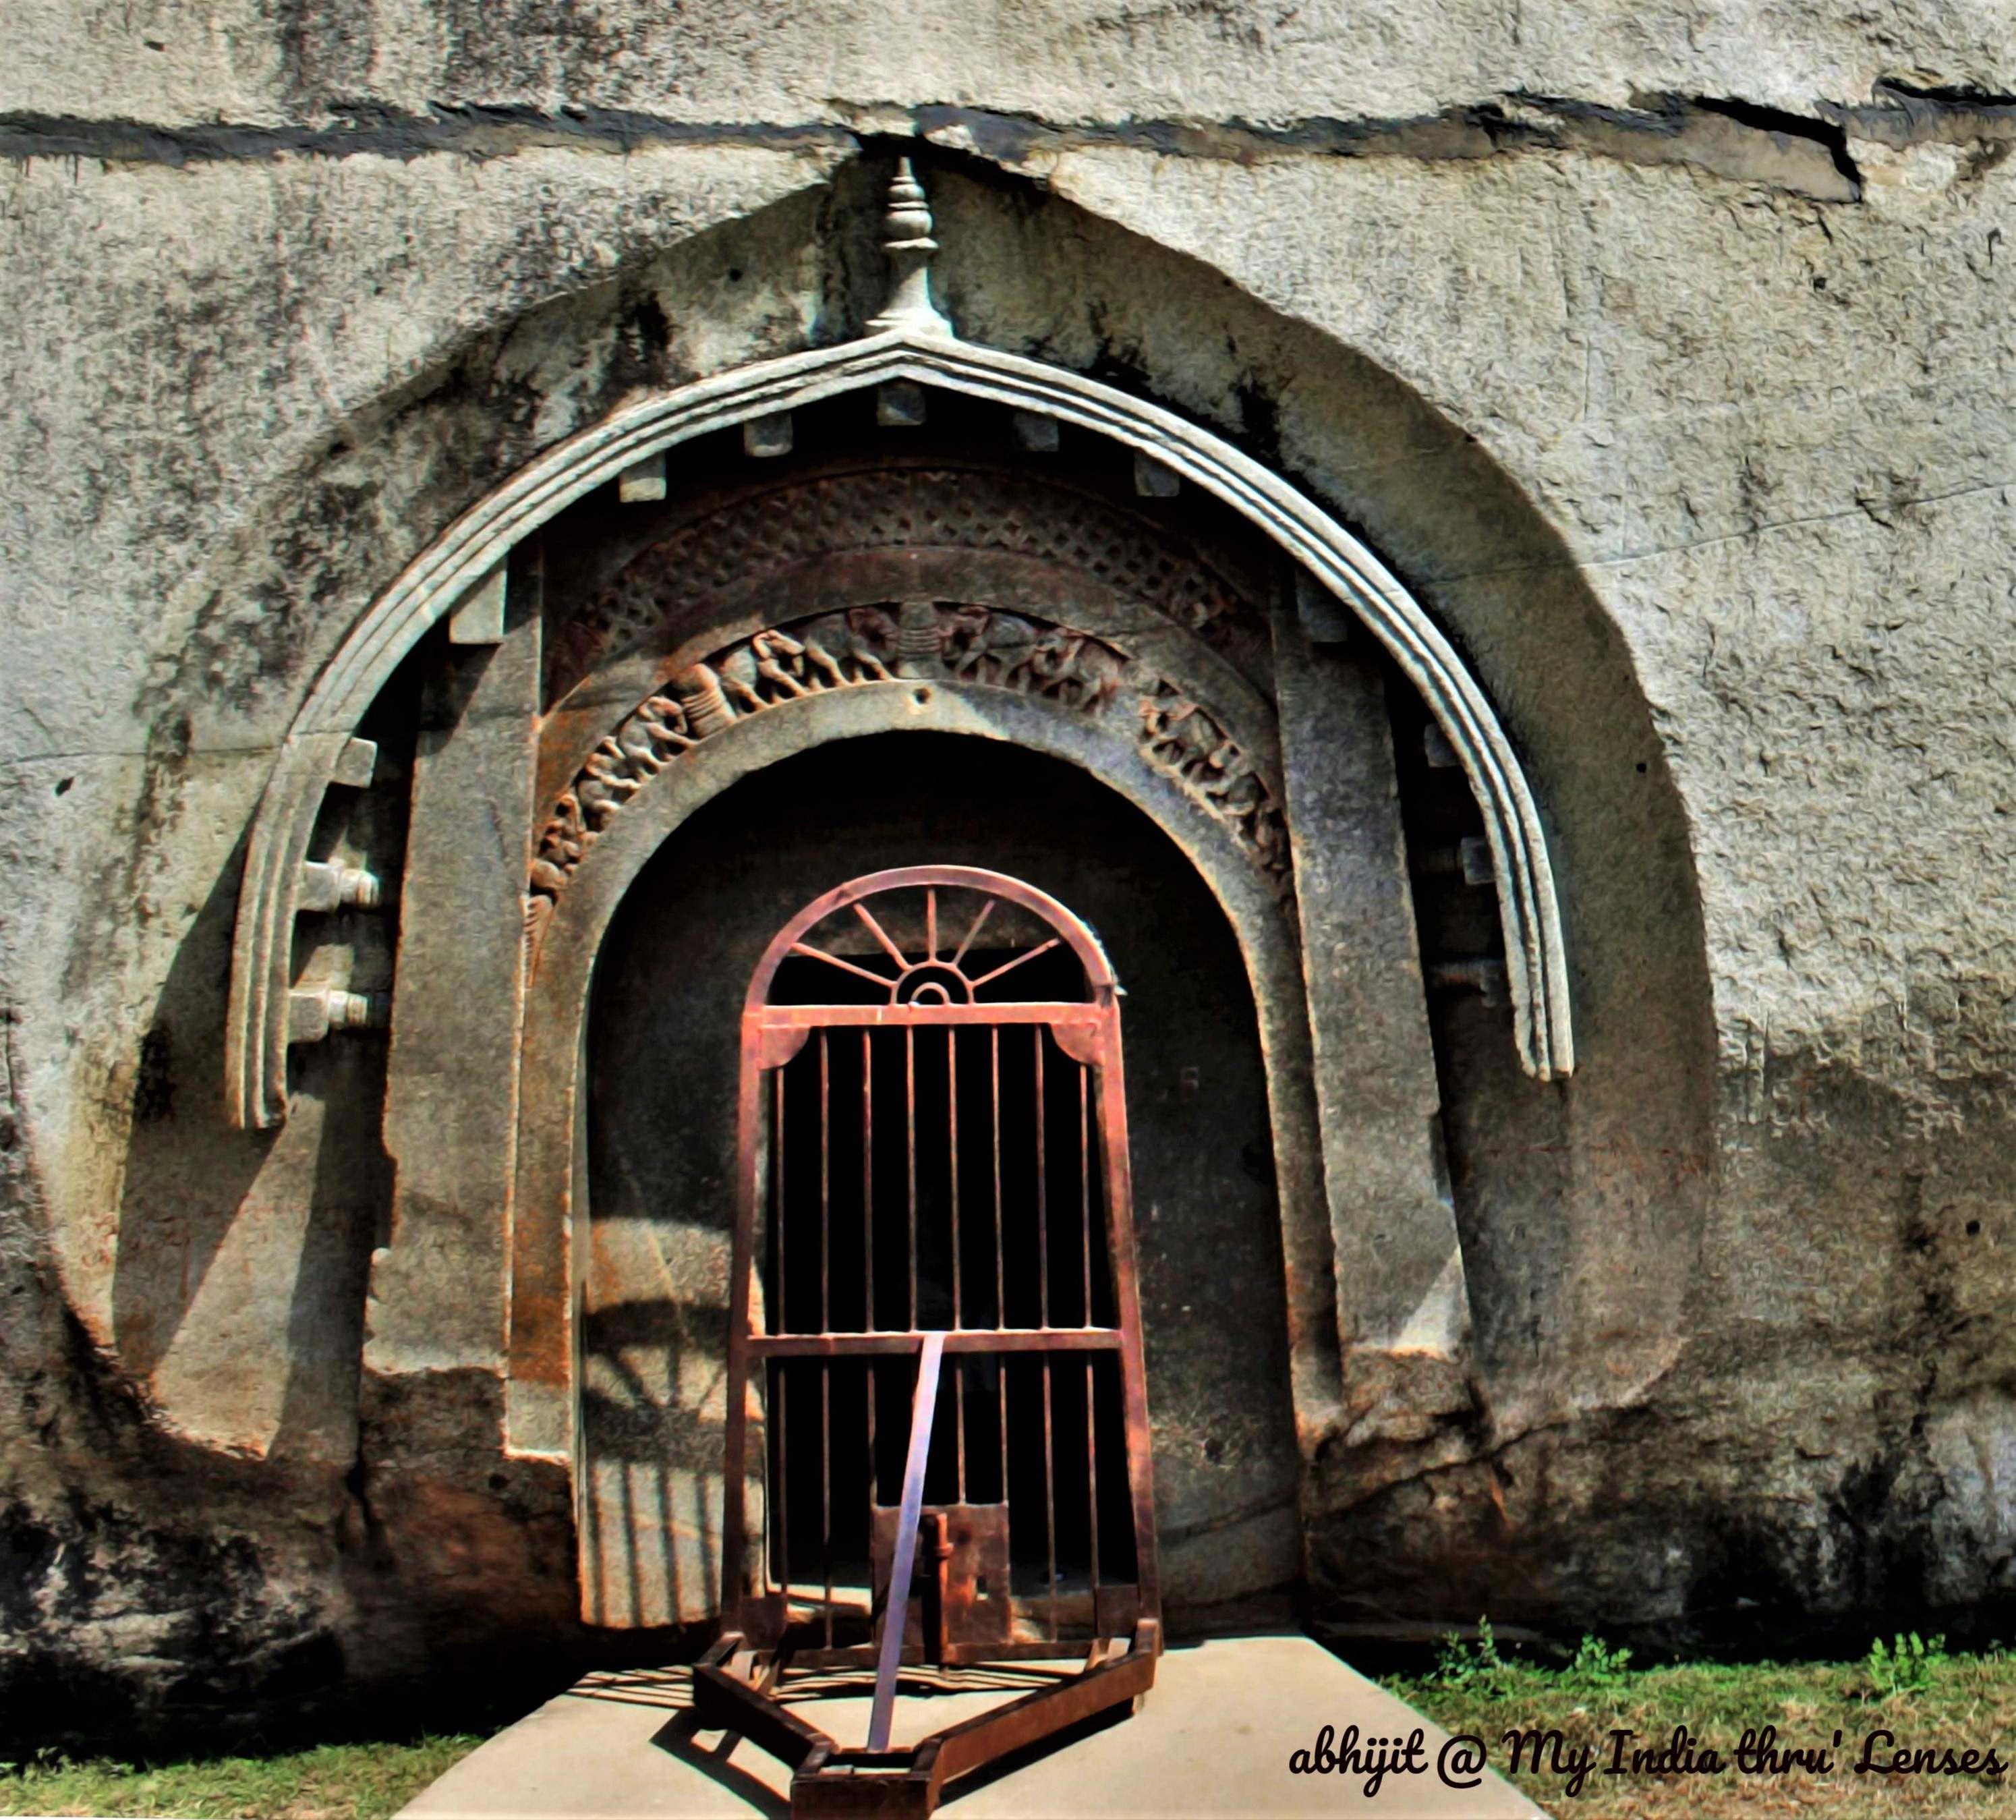 The Ornate Entrance of Lomas Rishi Cave